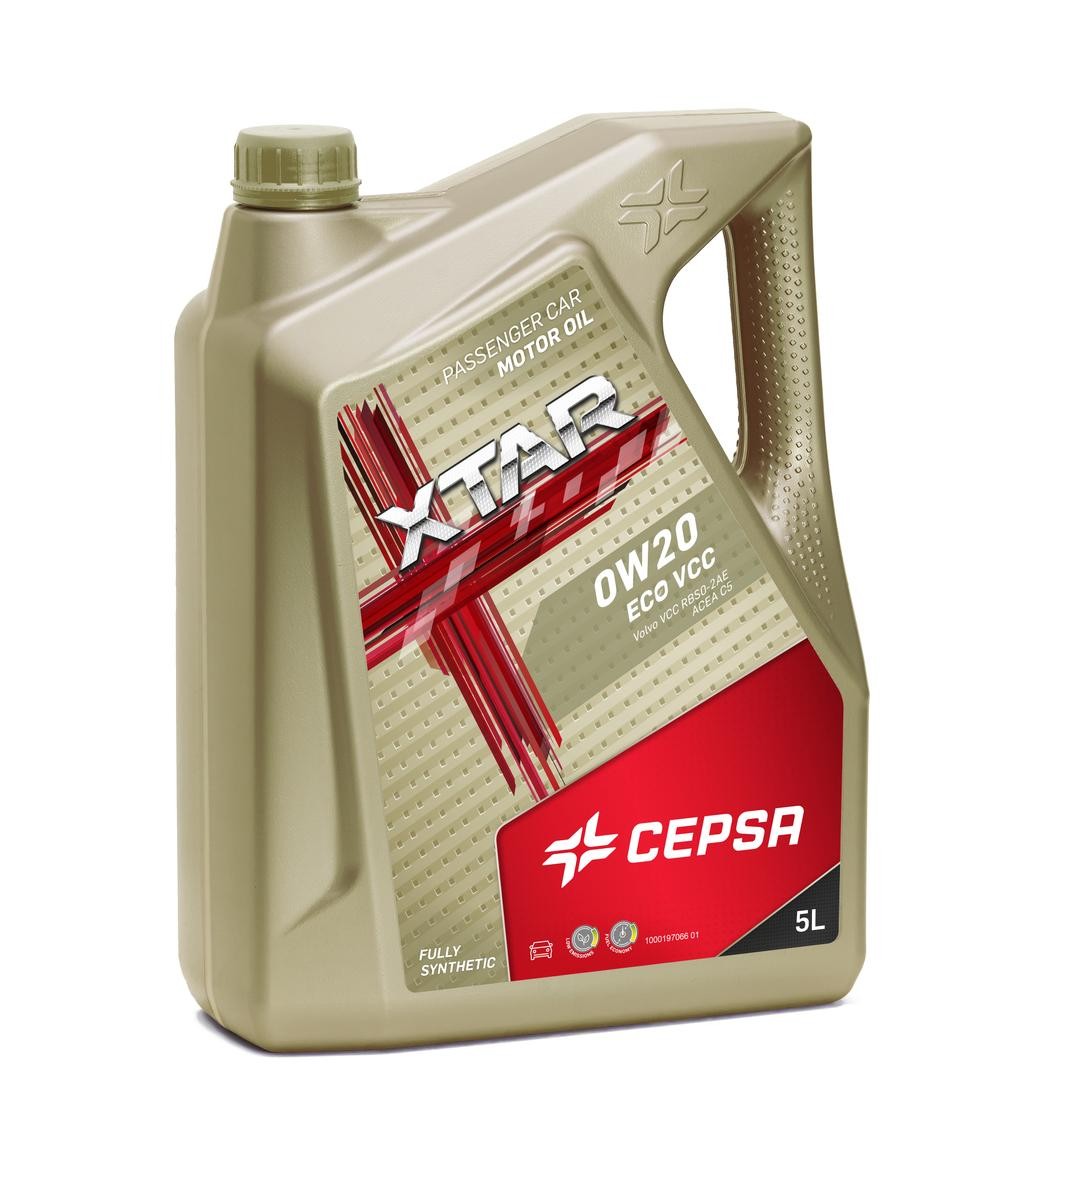 CEPSA XTAR, ECO VCC 0W-20, 5l, Synthetic, Full Synthetic Oil Motor oil 513993090 buy